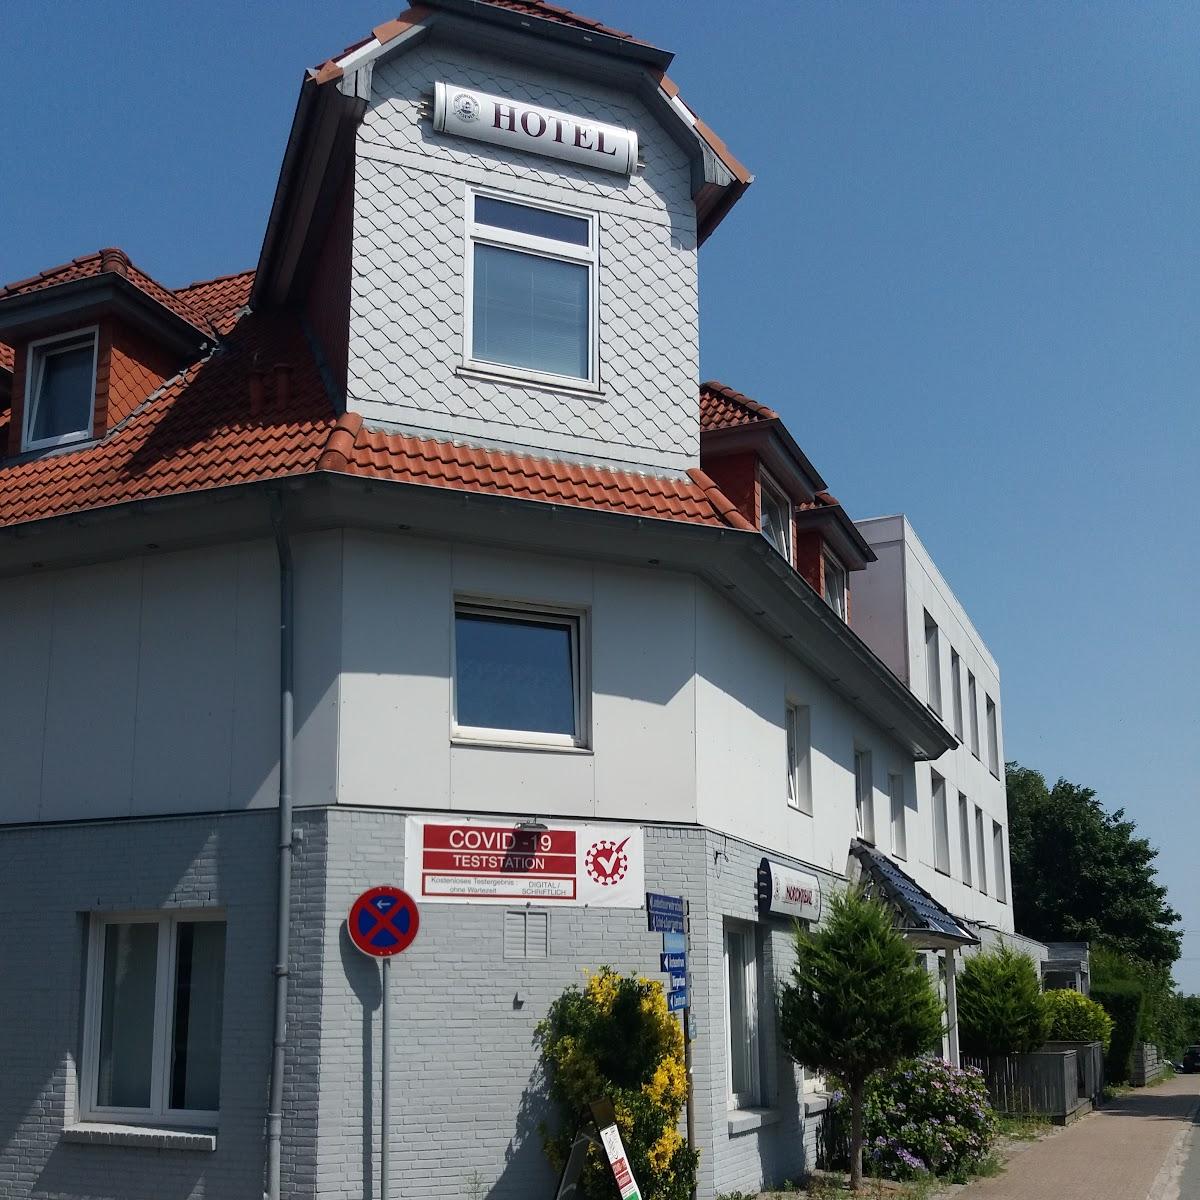 Restaurant "Hotel am Nordkreuz" in Harrislee